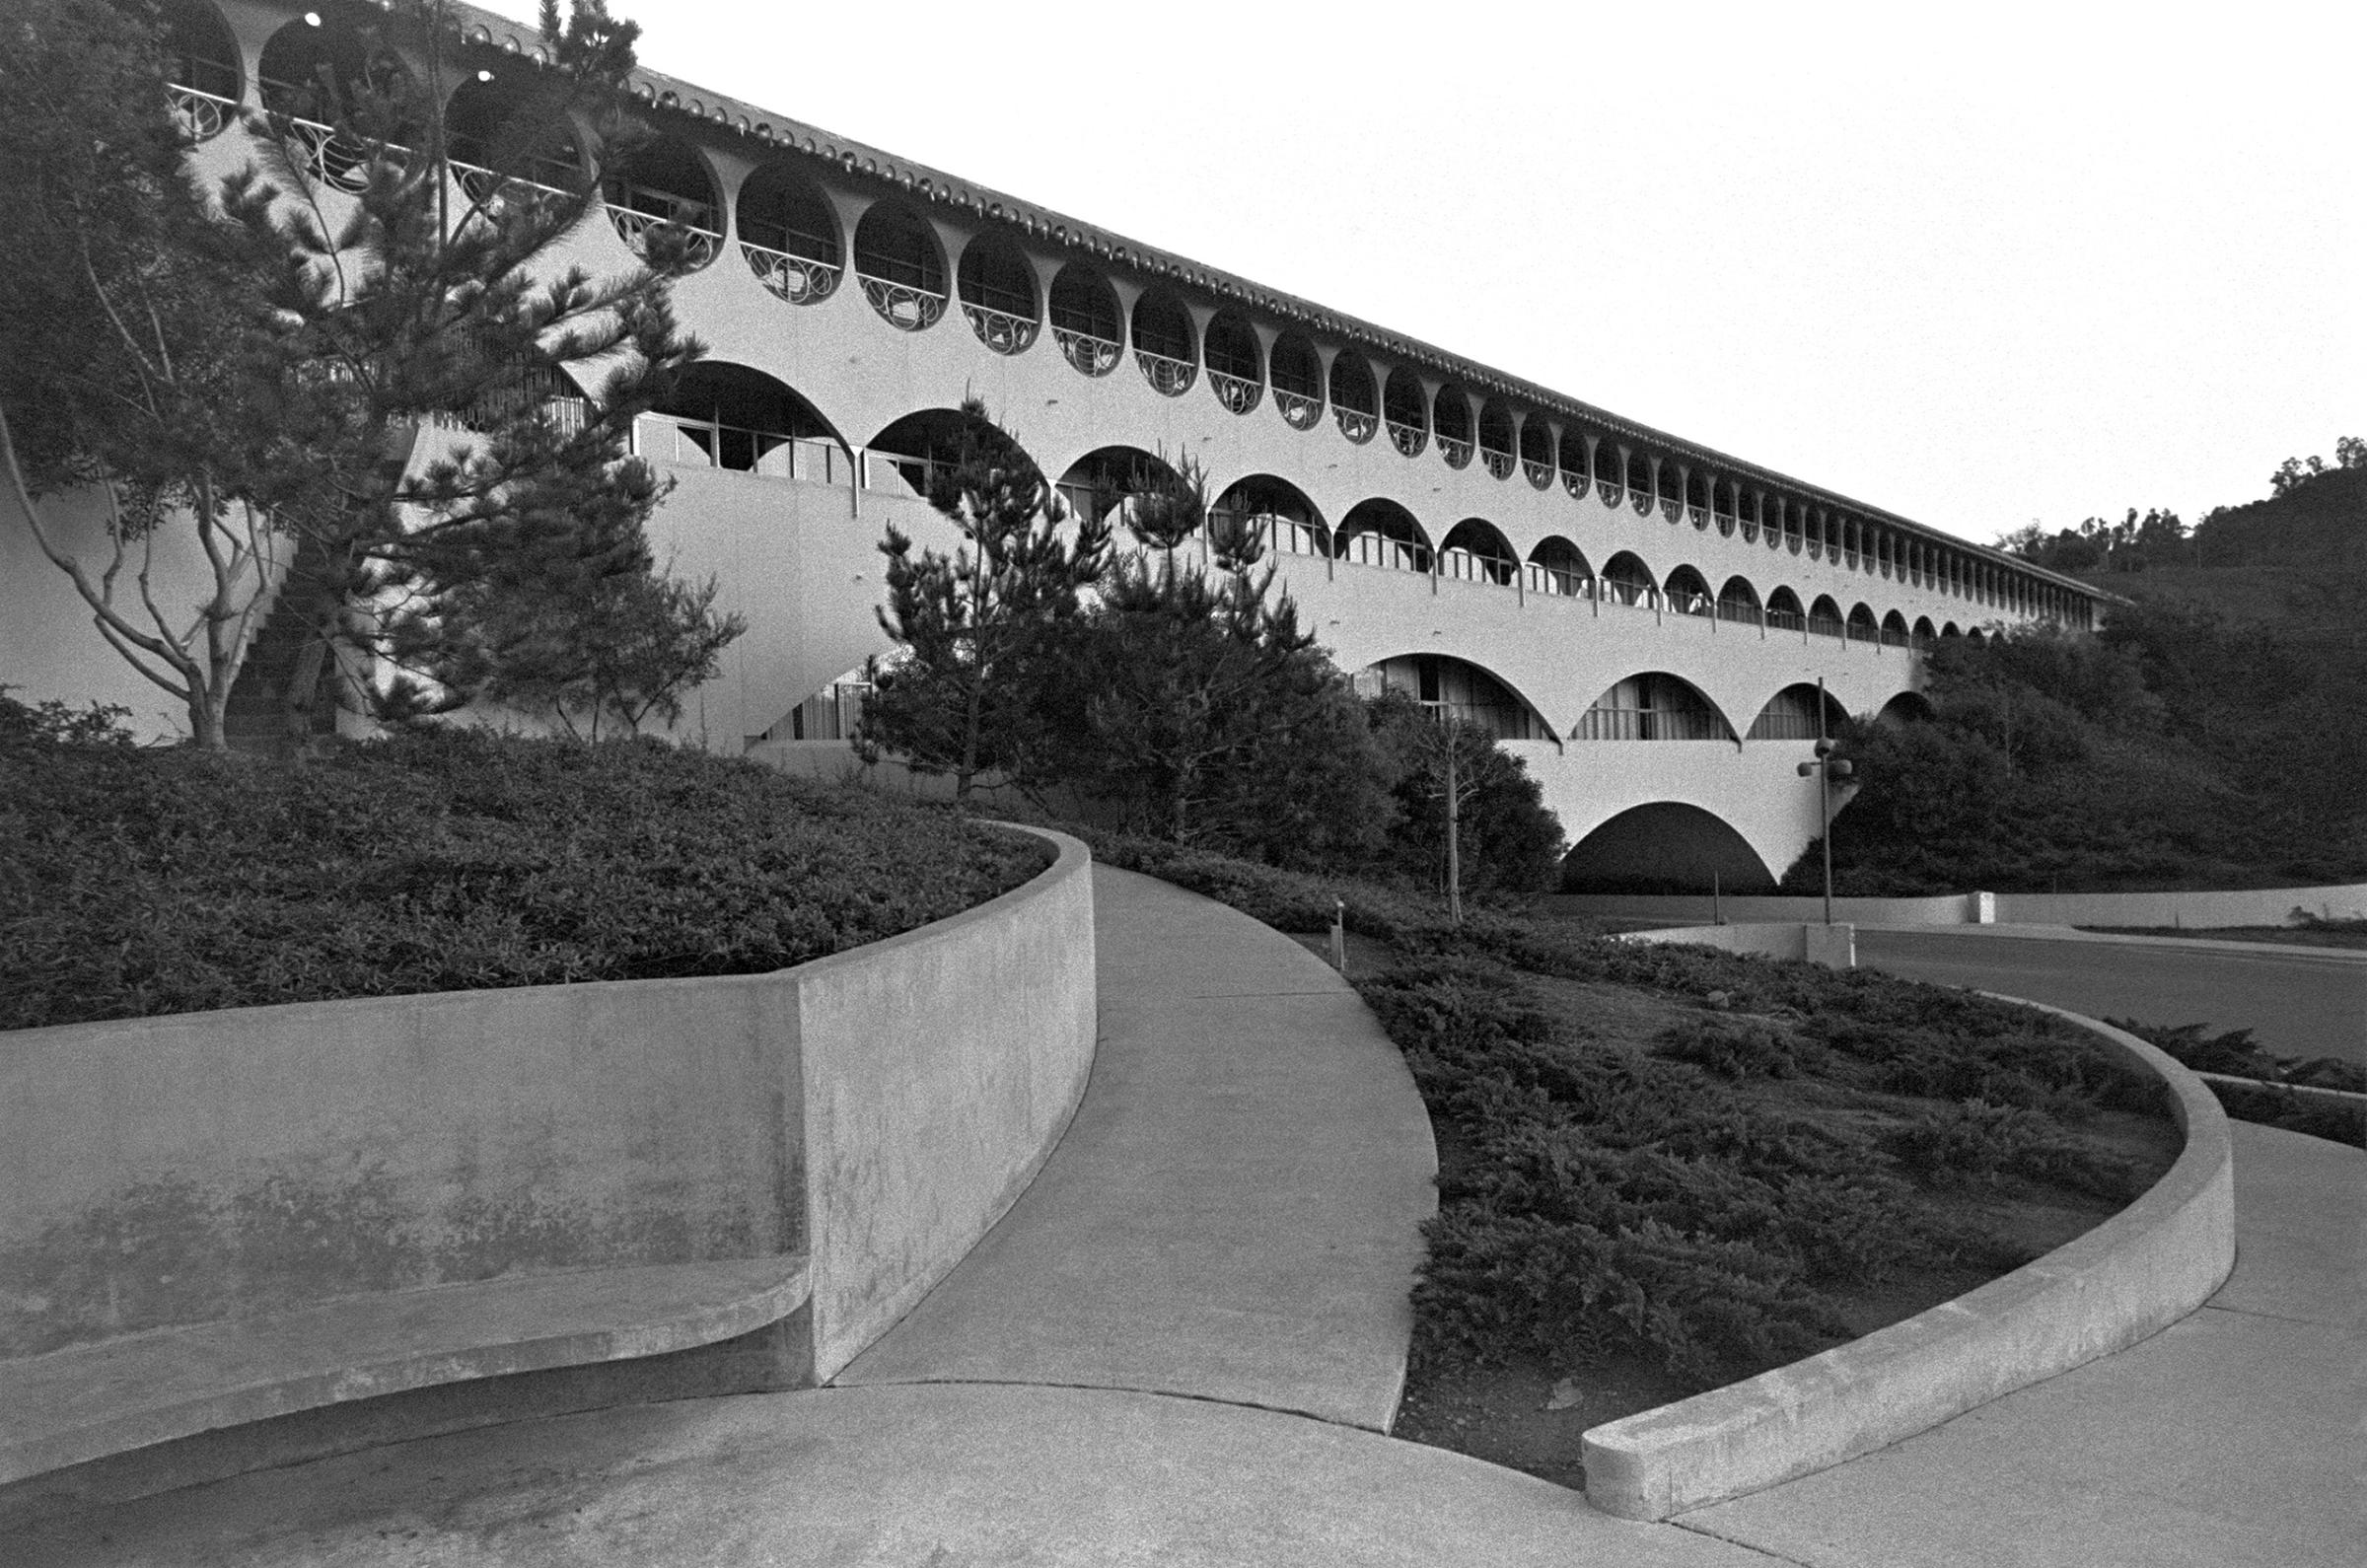 Frank Lloyd Wright's Marin County Civic Cente rin San Rafael, CA. Built circa 1960.